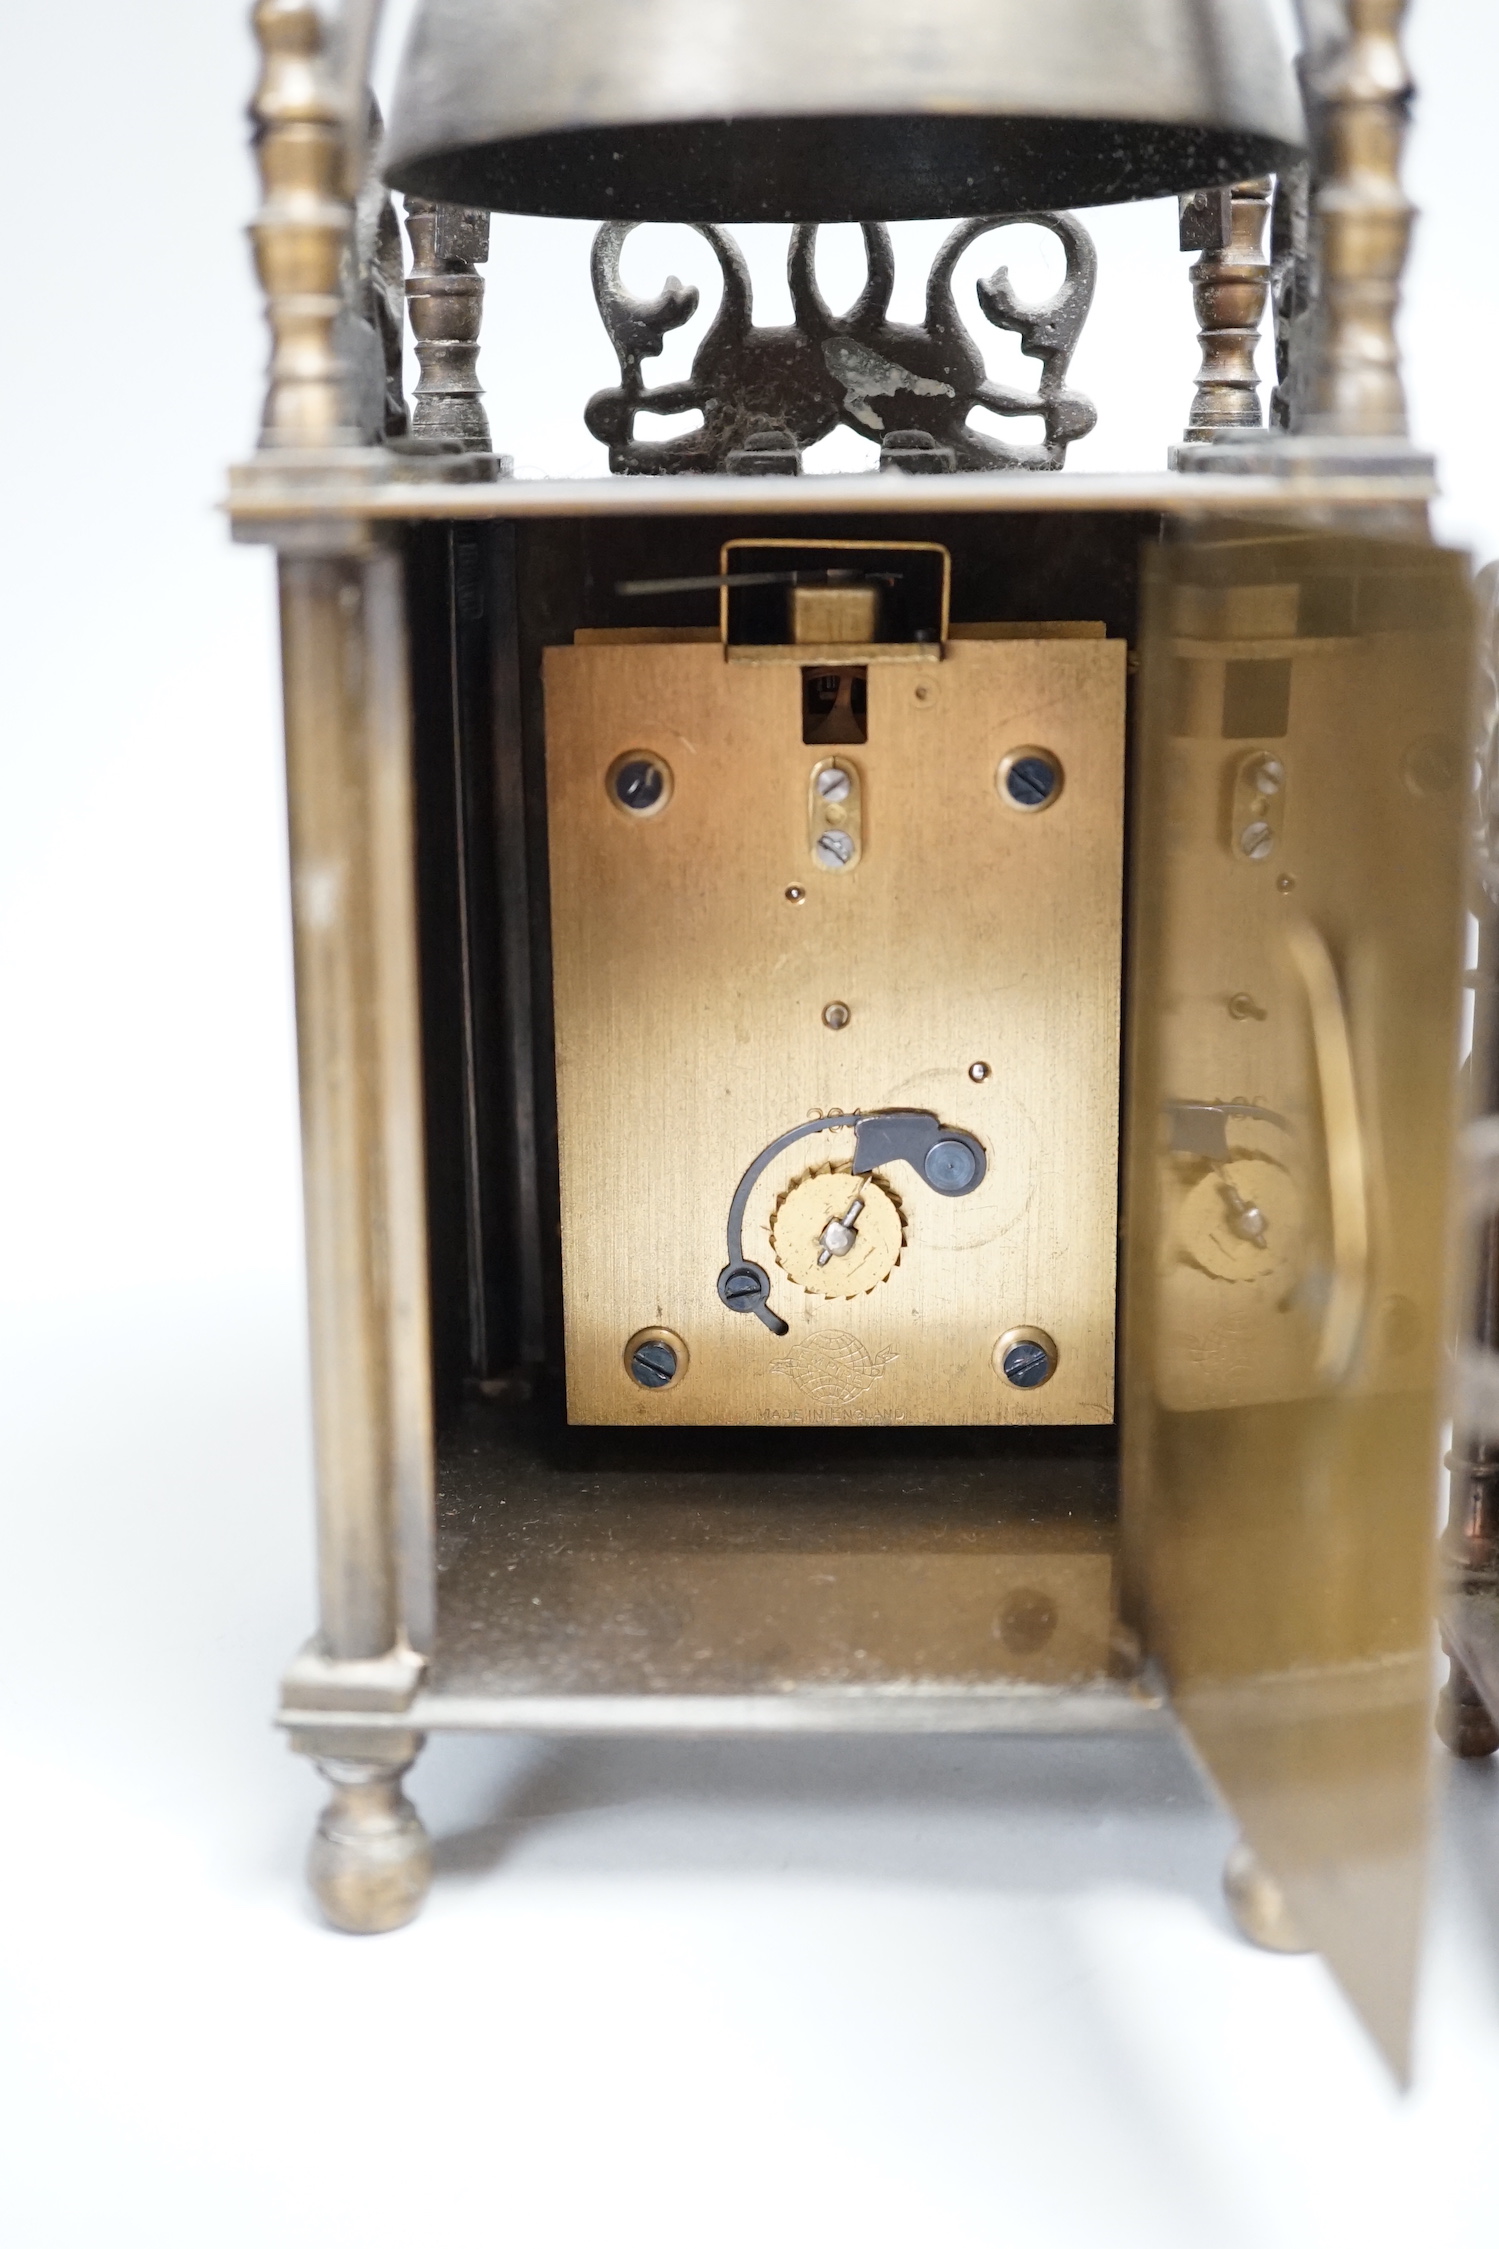 Two reproduction brass lantern clocks, tallest 24cm high